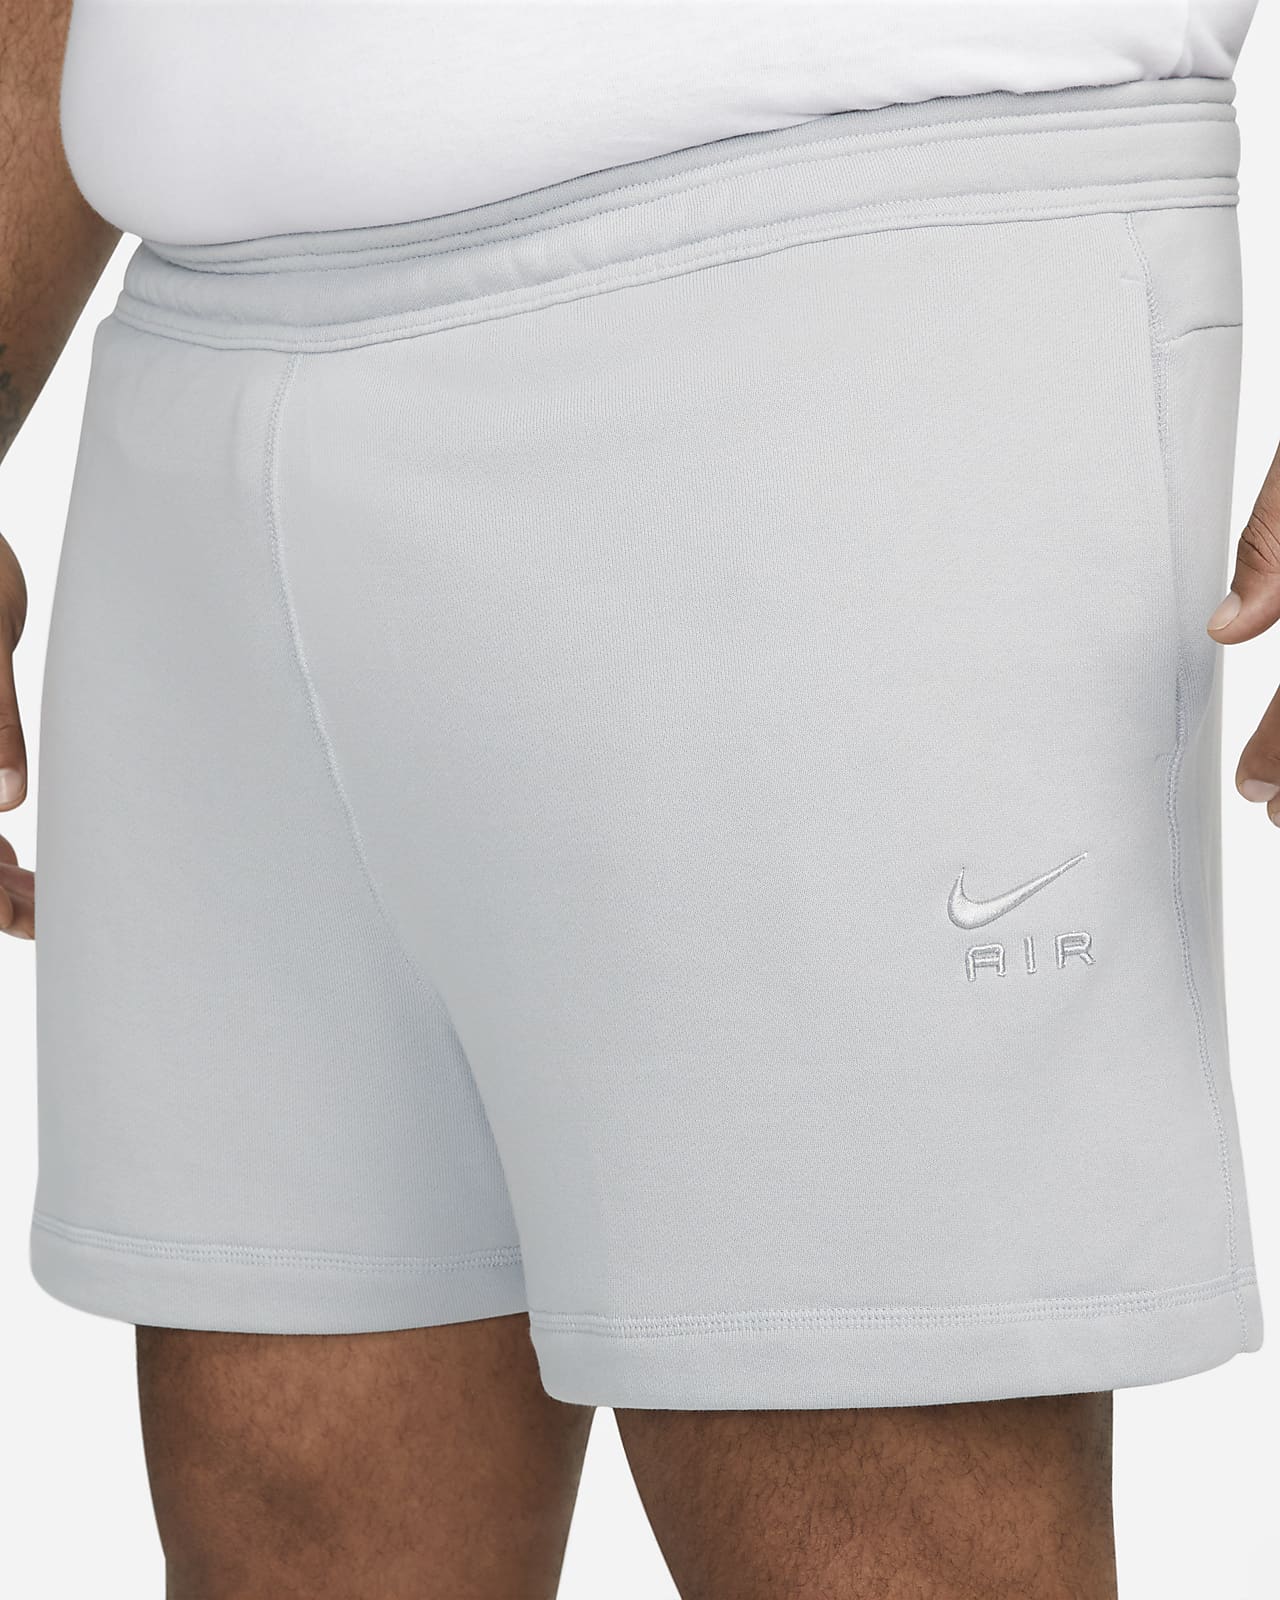 Nike Sportswear Air Men's French Terry Shorts.